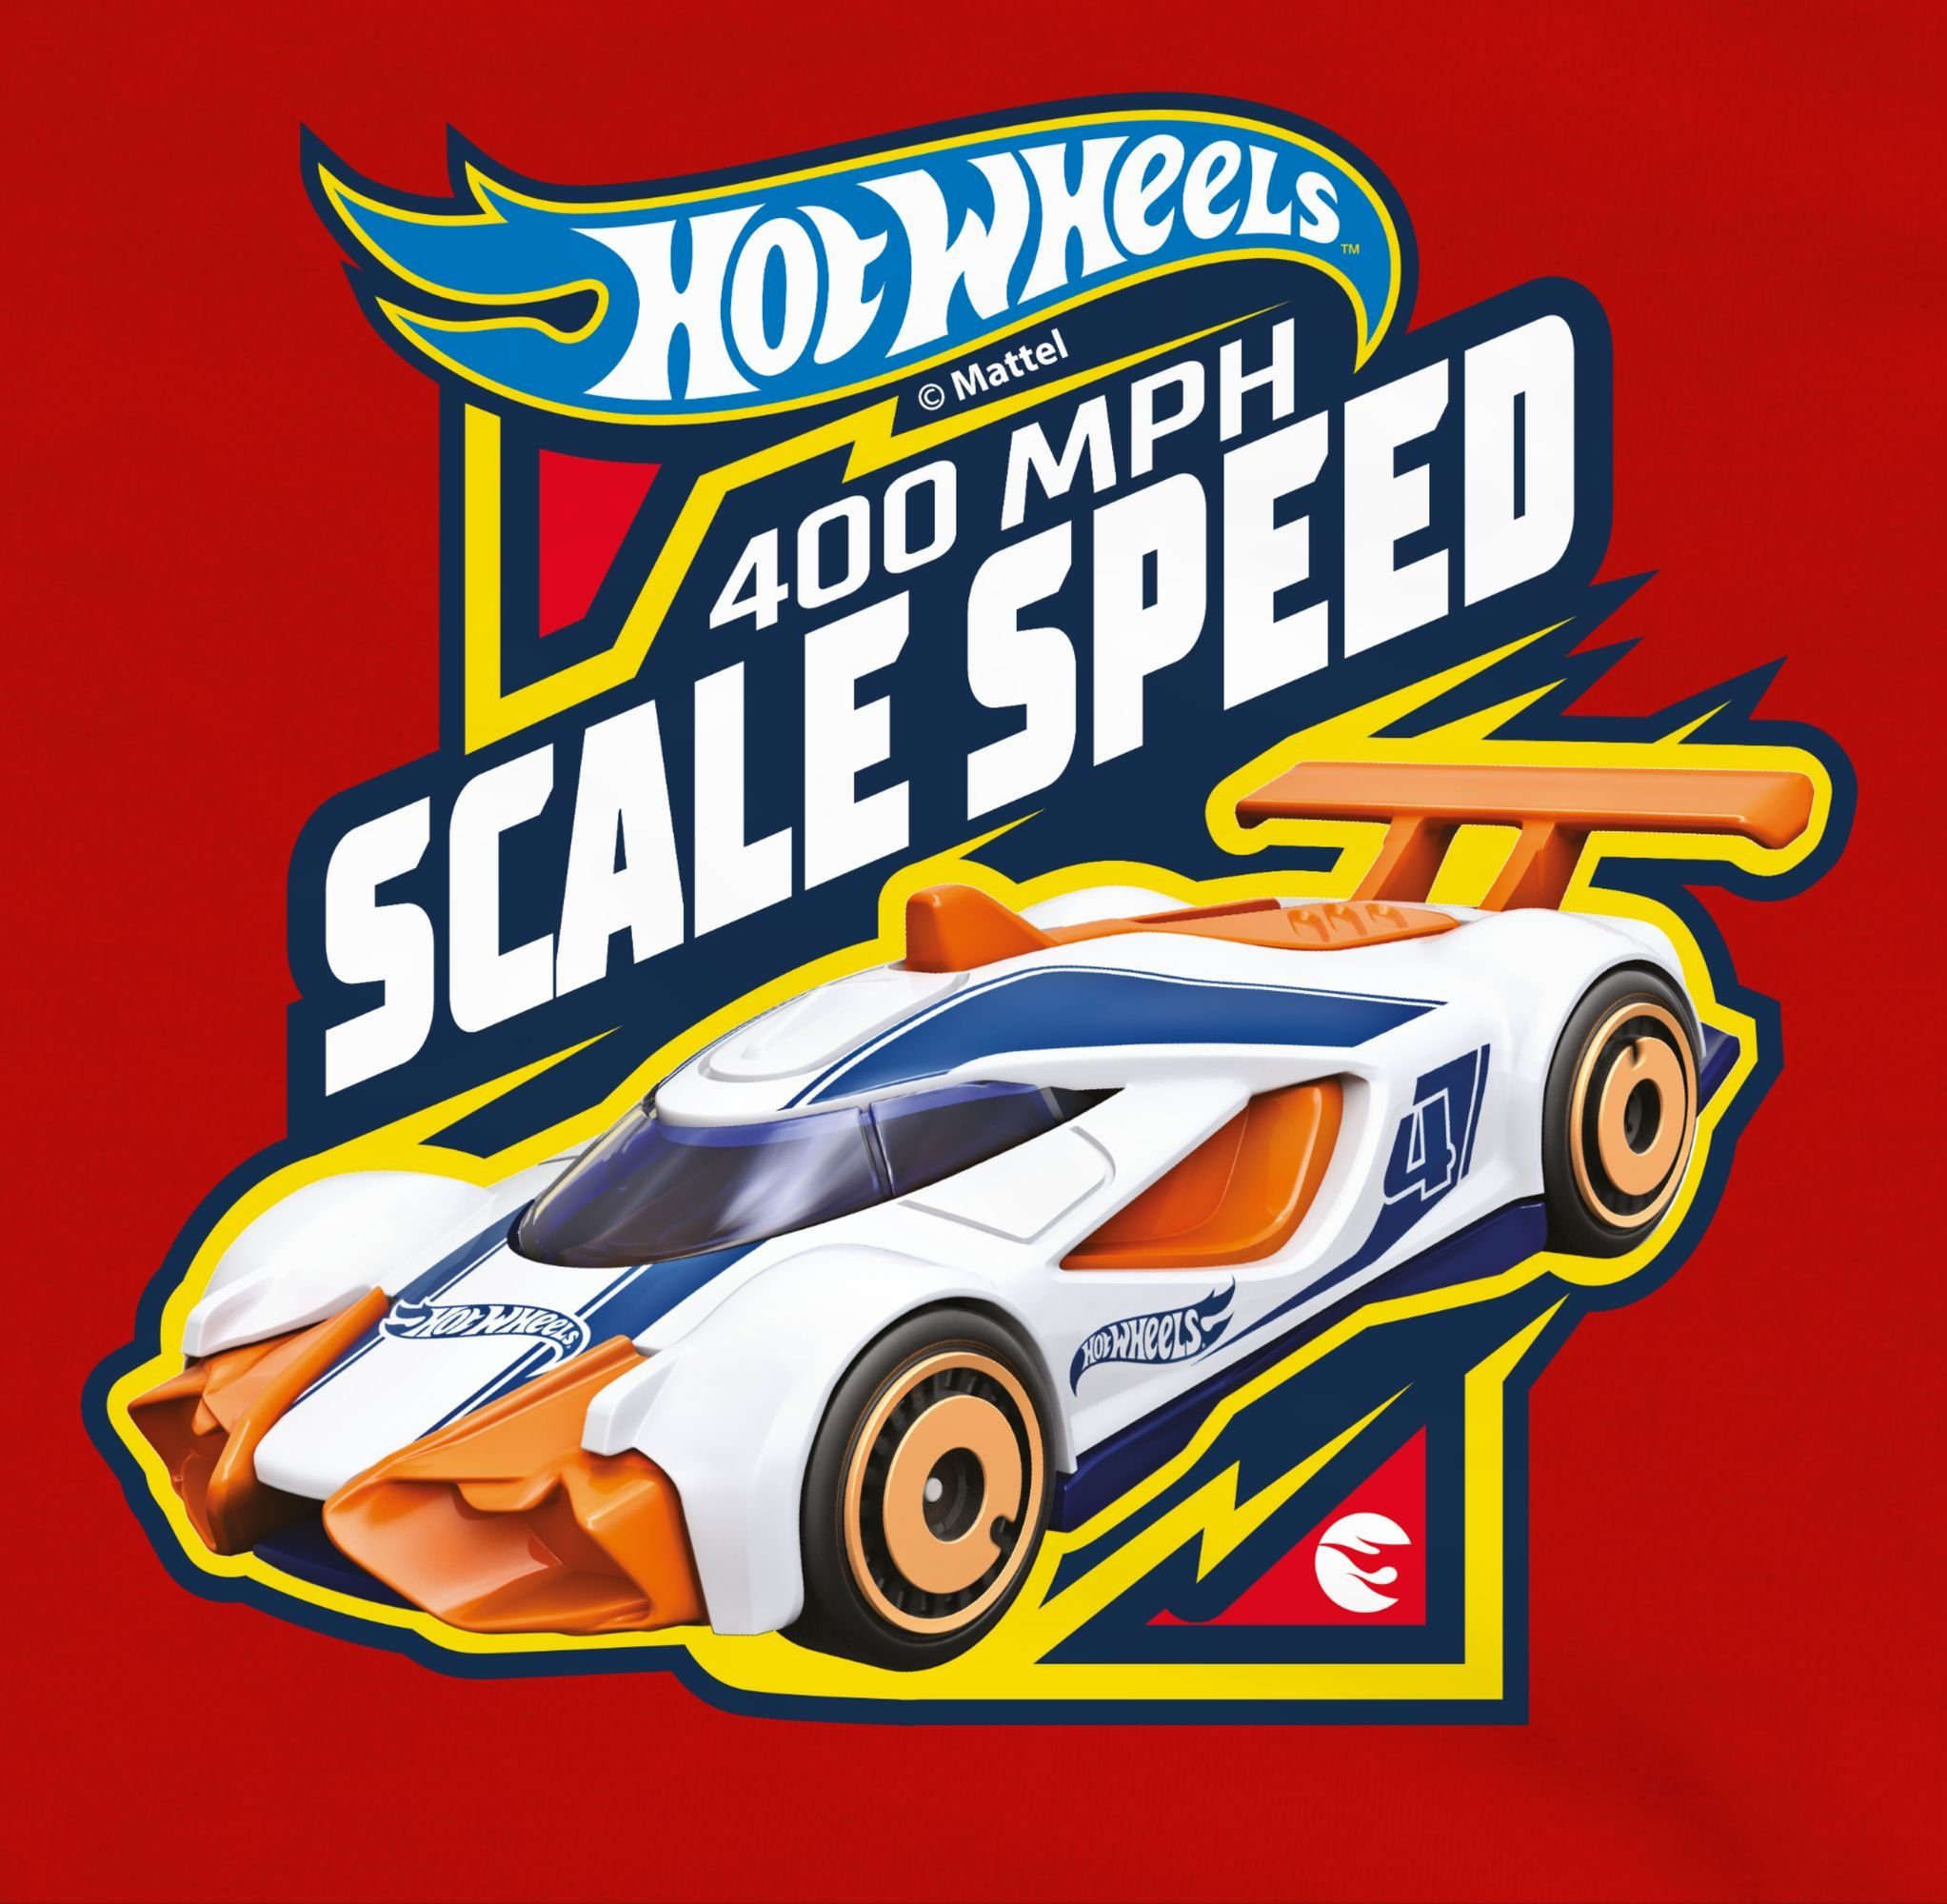 Scale Speed 400MPH Hot 3 Wheels Rot Sweatshirt Shirtracer Mädchen